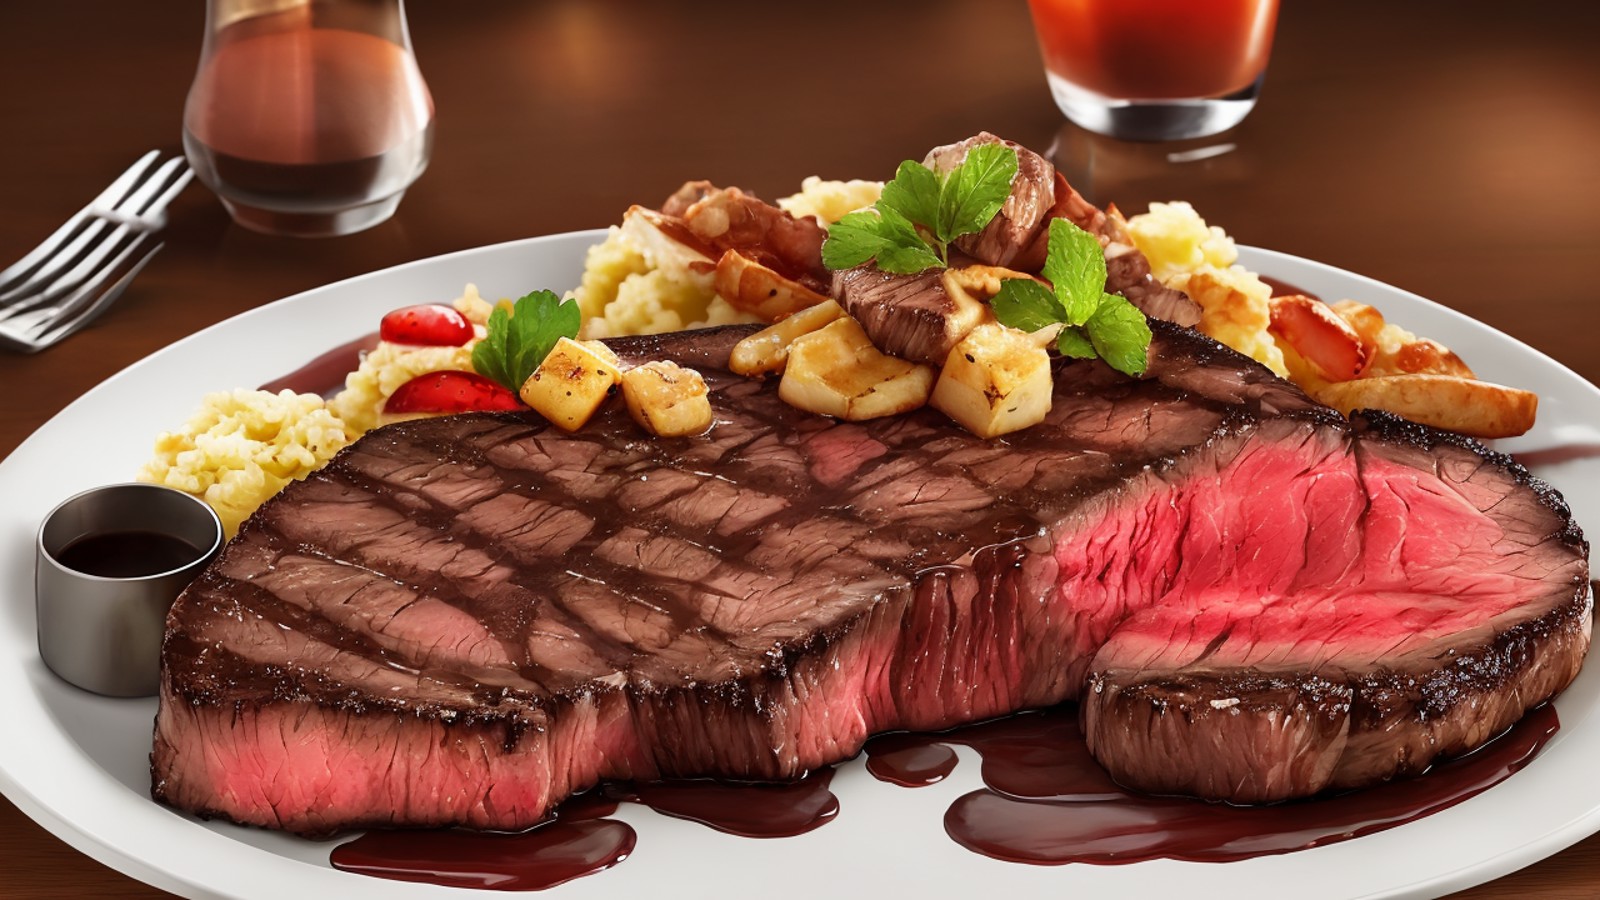 digital illustration of an amazing steak dinner with dessert, no_human